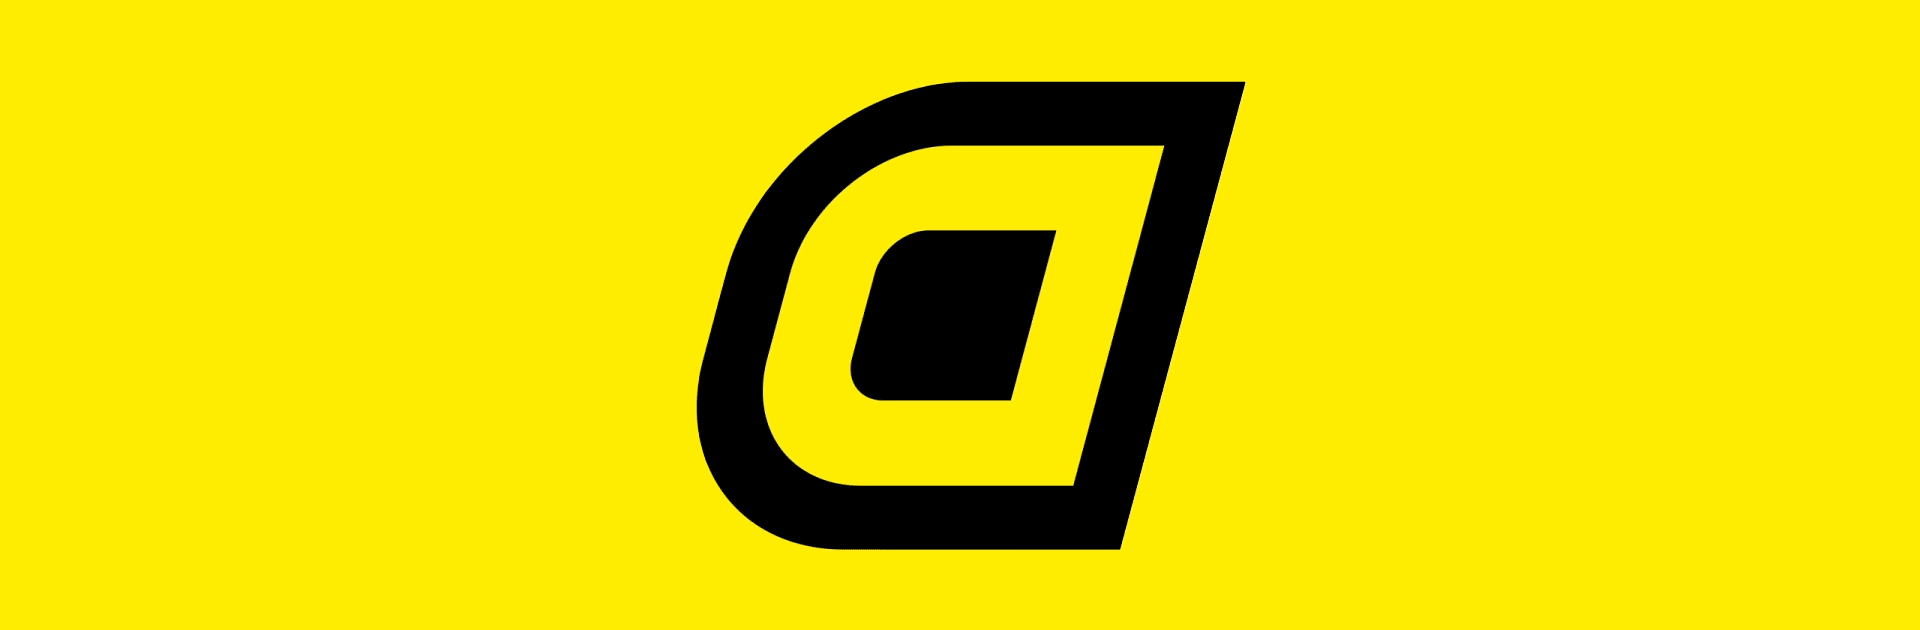 autoQ nyt logo animation